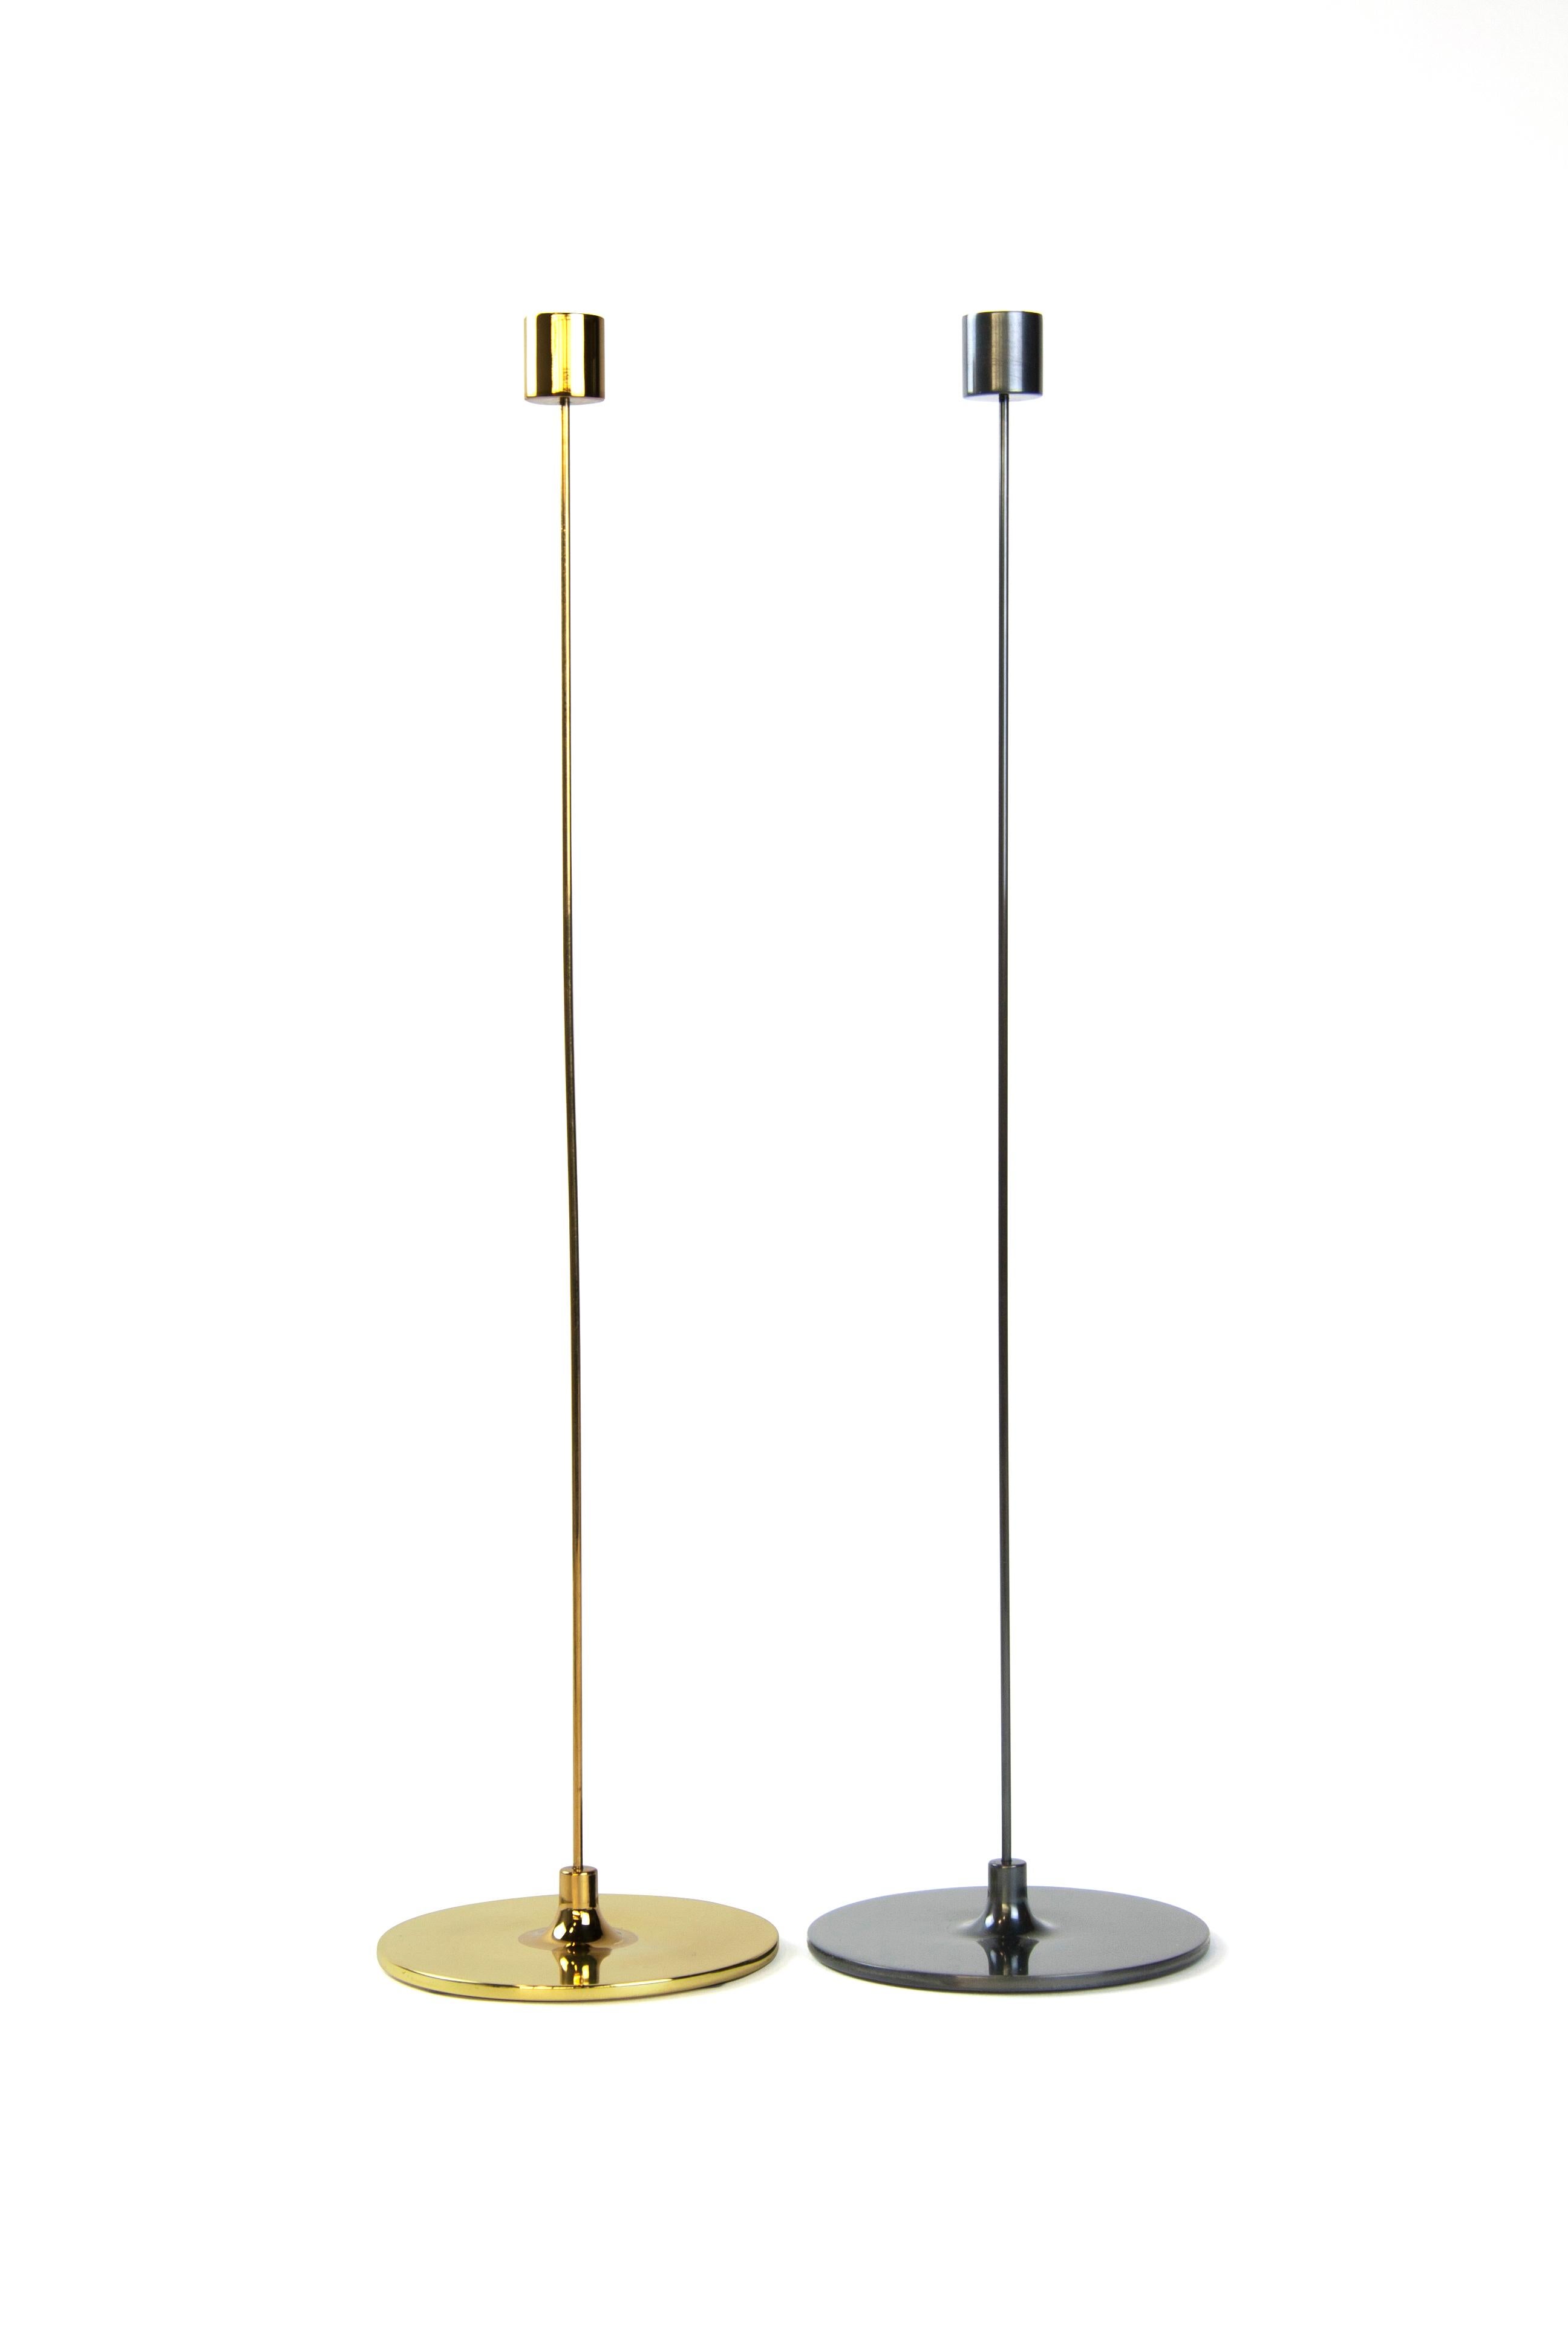 American Medium Pin Darkened Brass Candlestick by Gentner Design For Sale